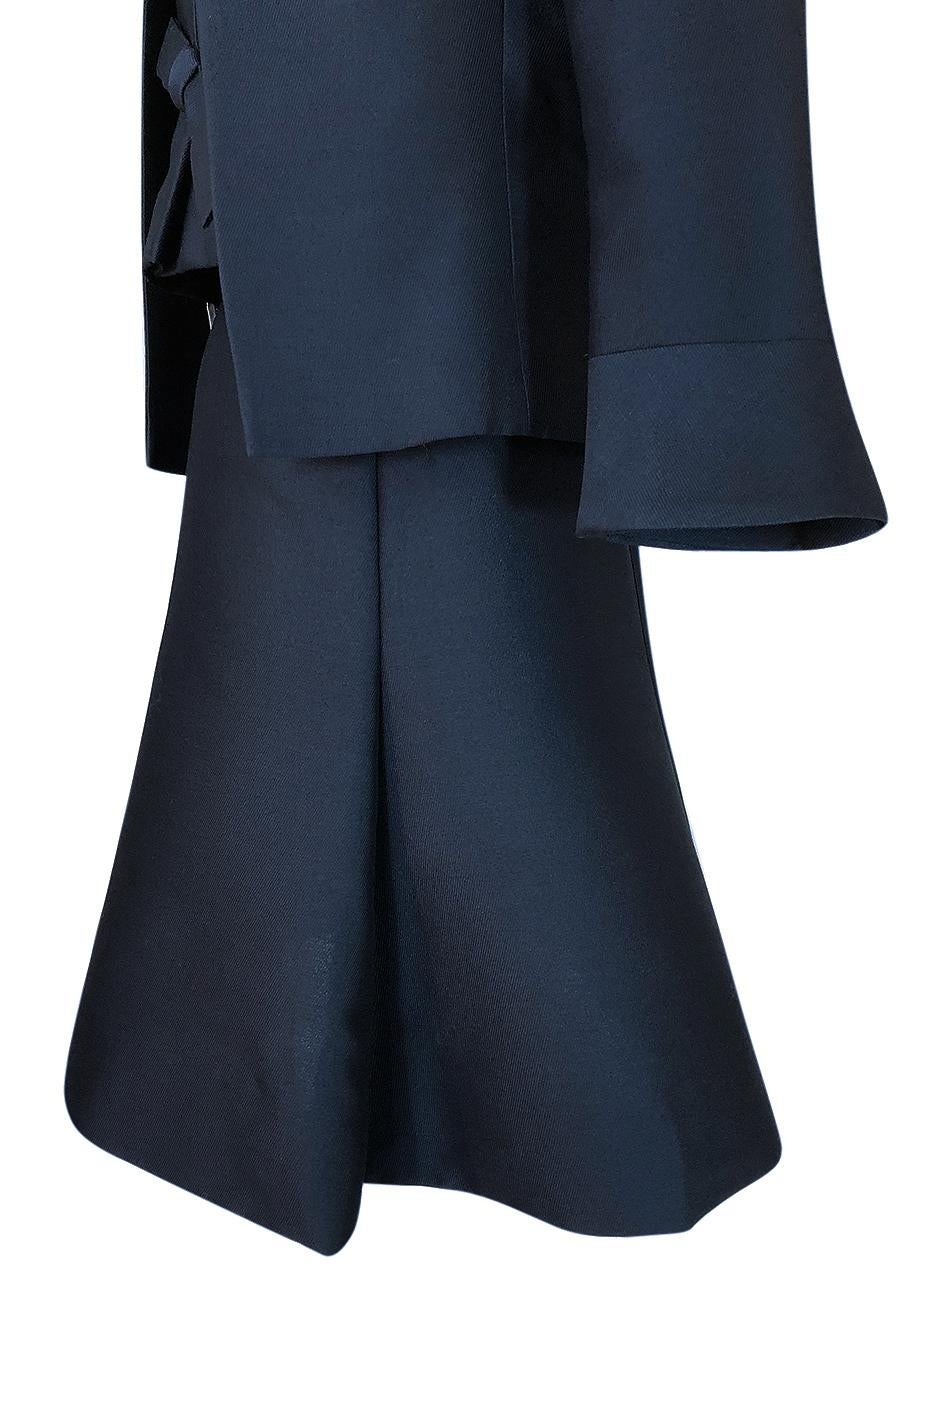 1950s Christian Dior Midnight Blue Demi-Couture 3 Piece Dress Suit 9